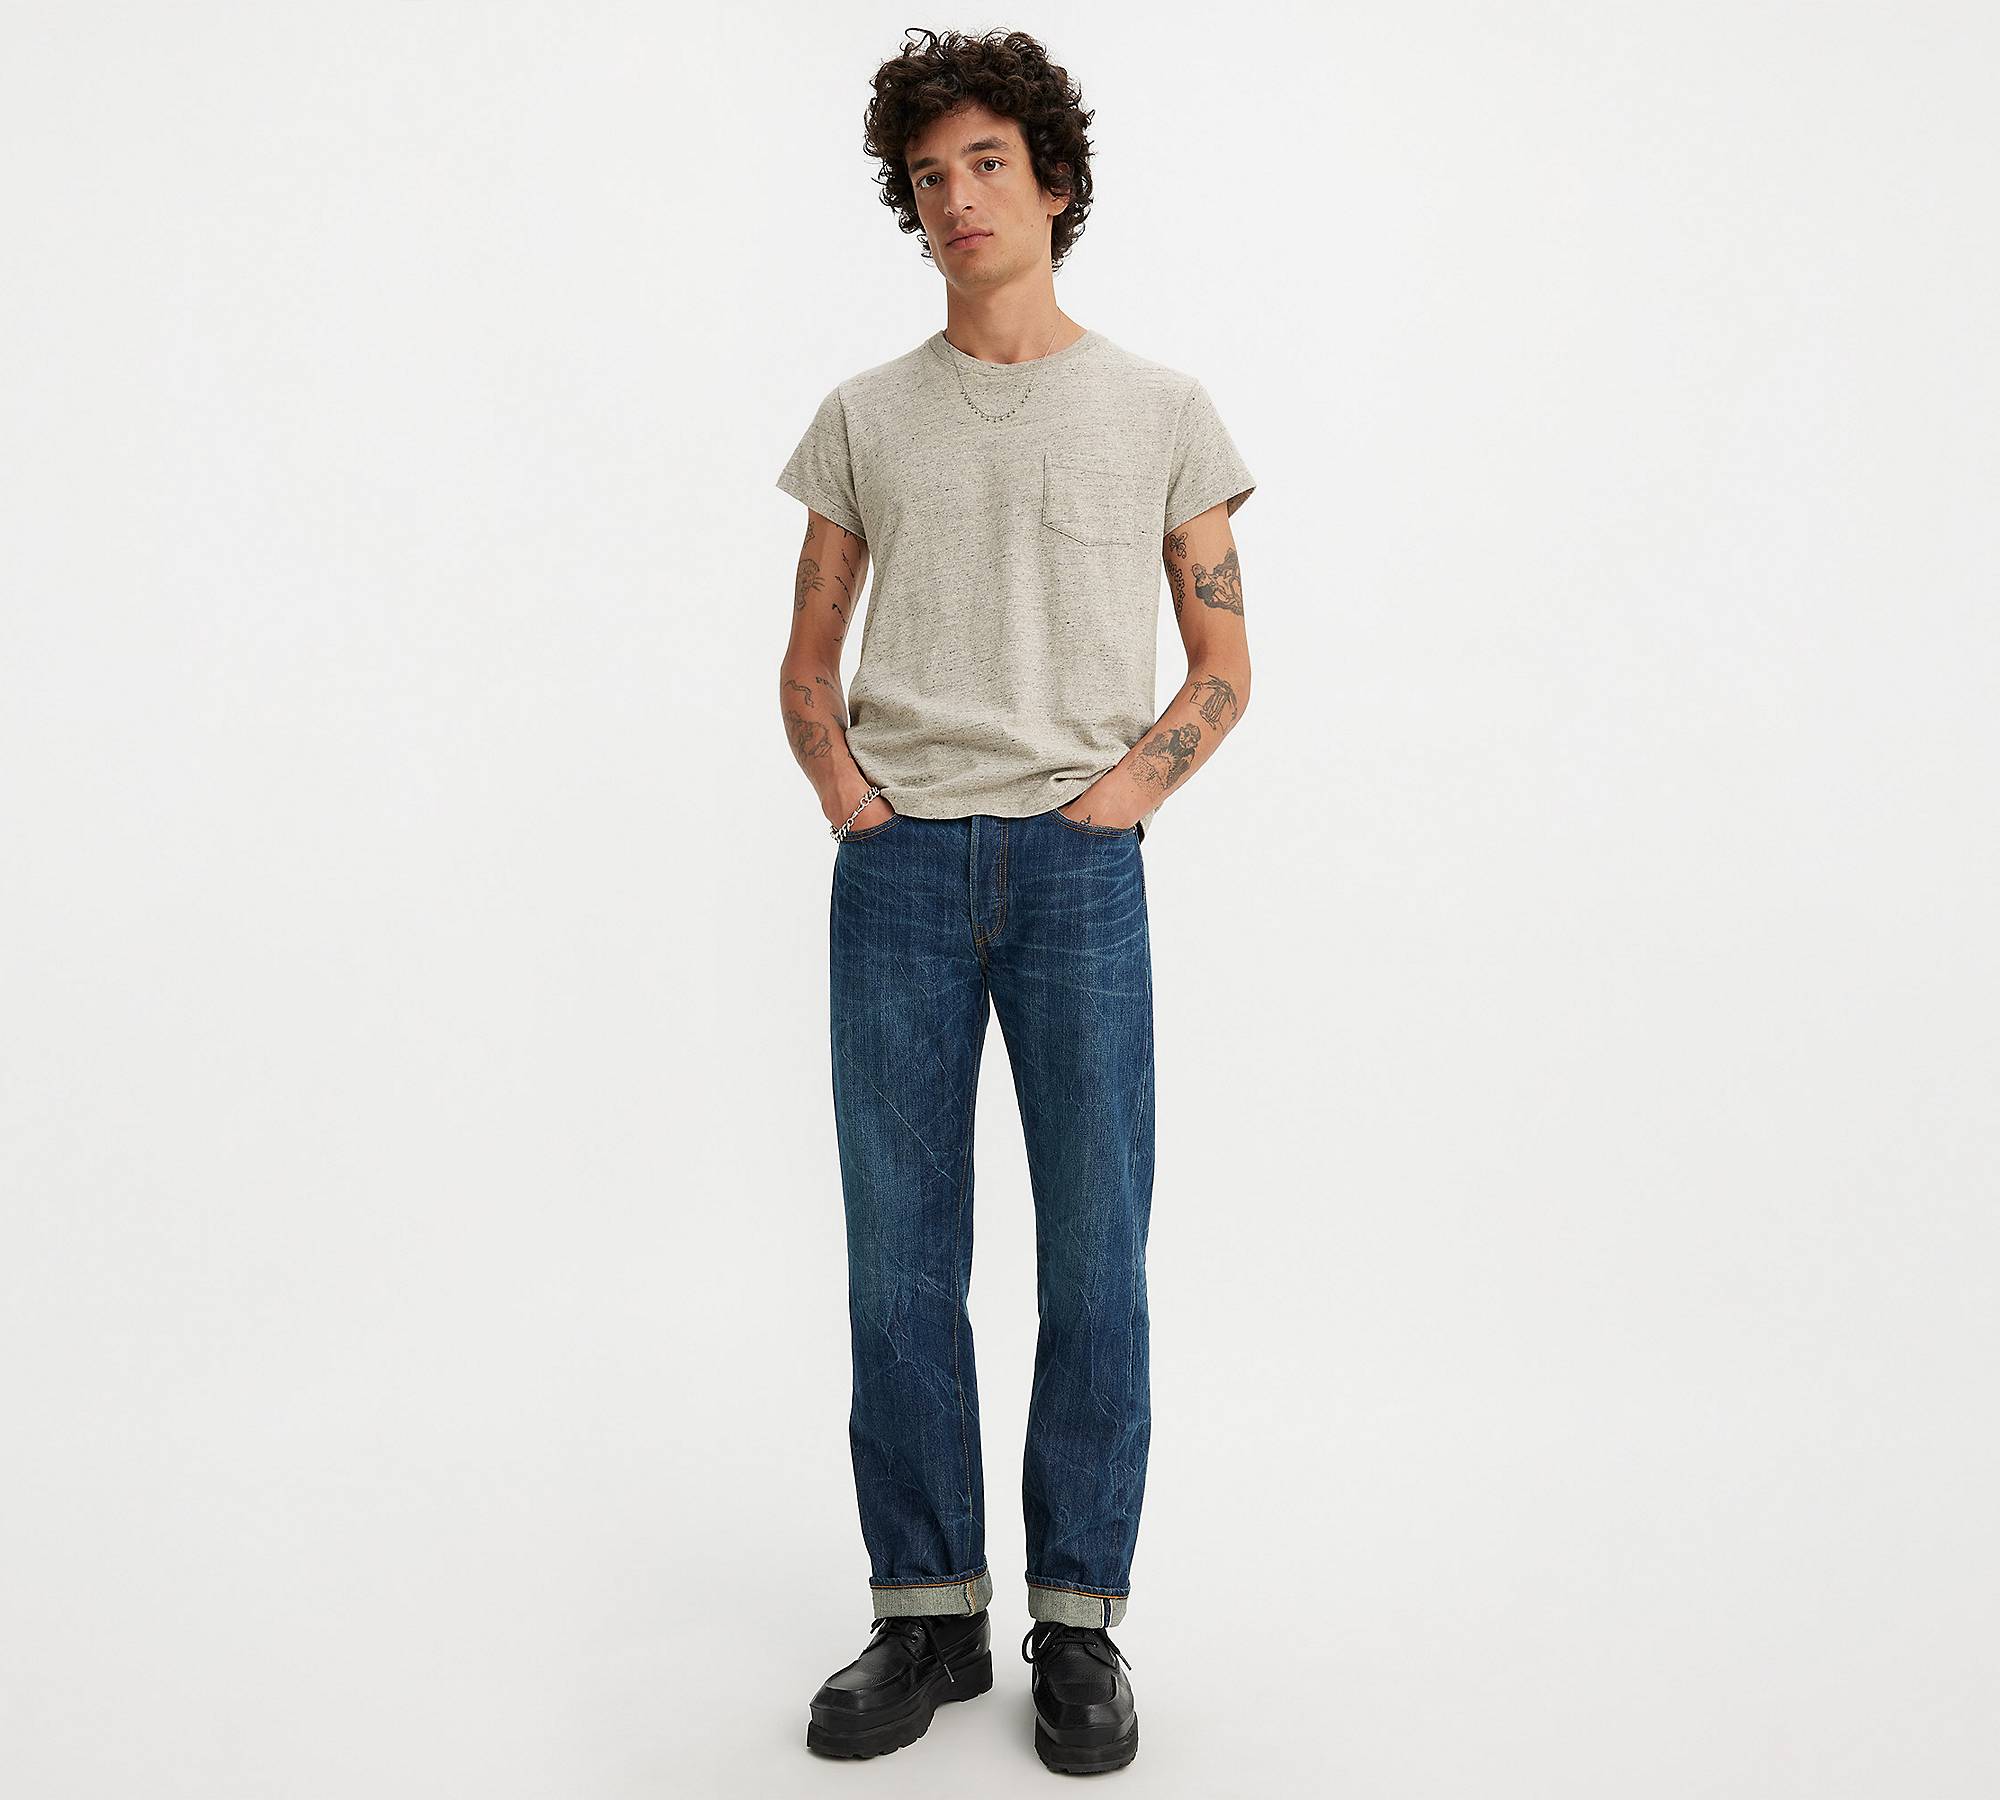 1947 501® Original Fit Selvedge Men's Jeans 1